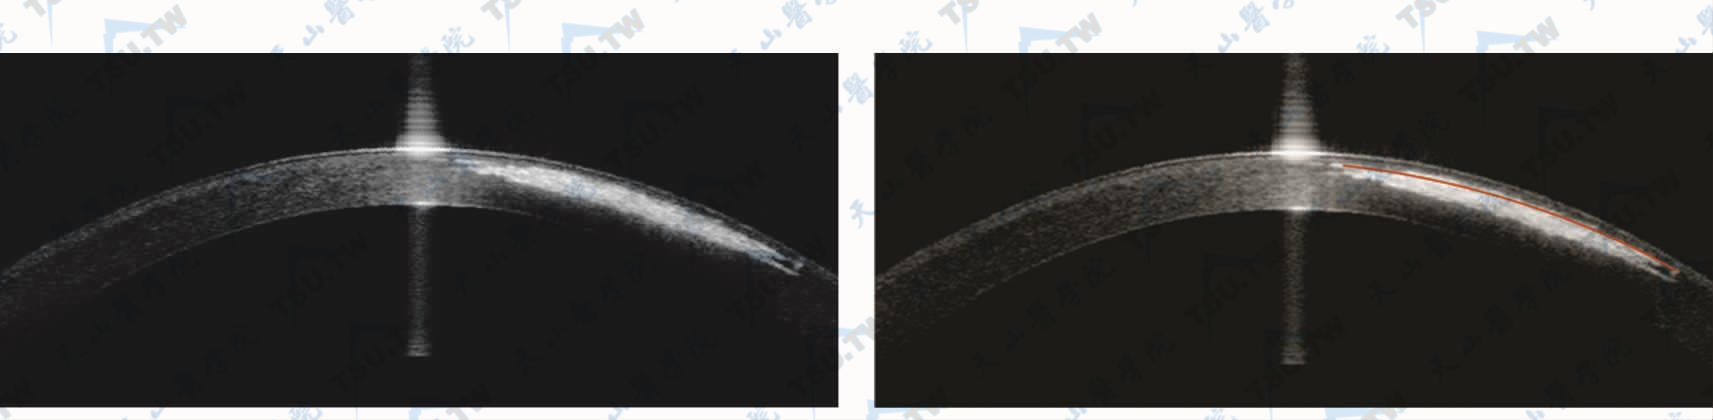 FS-LASIK手术中OBL进入瓣上角膜组织后可能会产生掀瓣困难